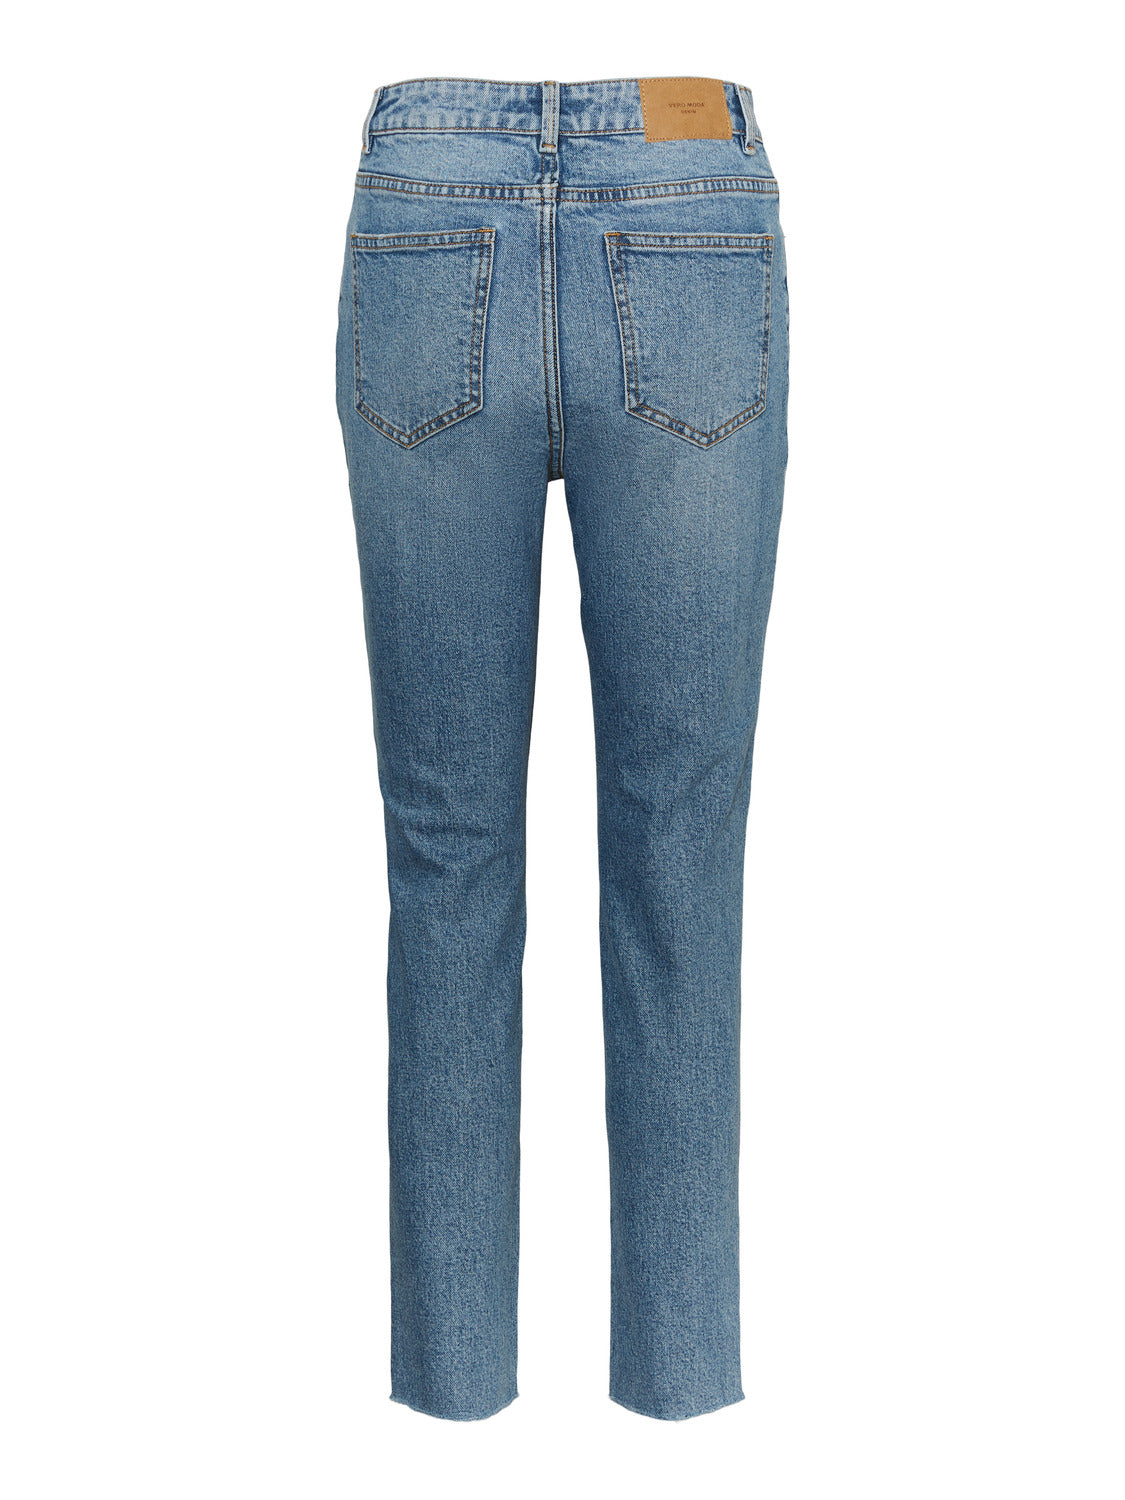 VMBRENDA Jeans - Light Blue Denim